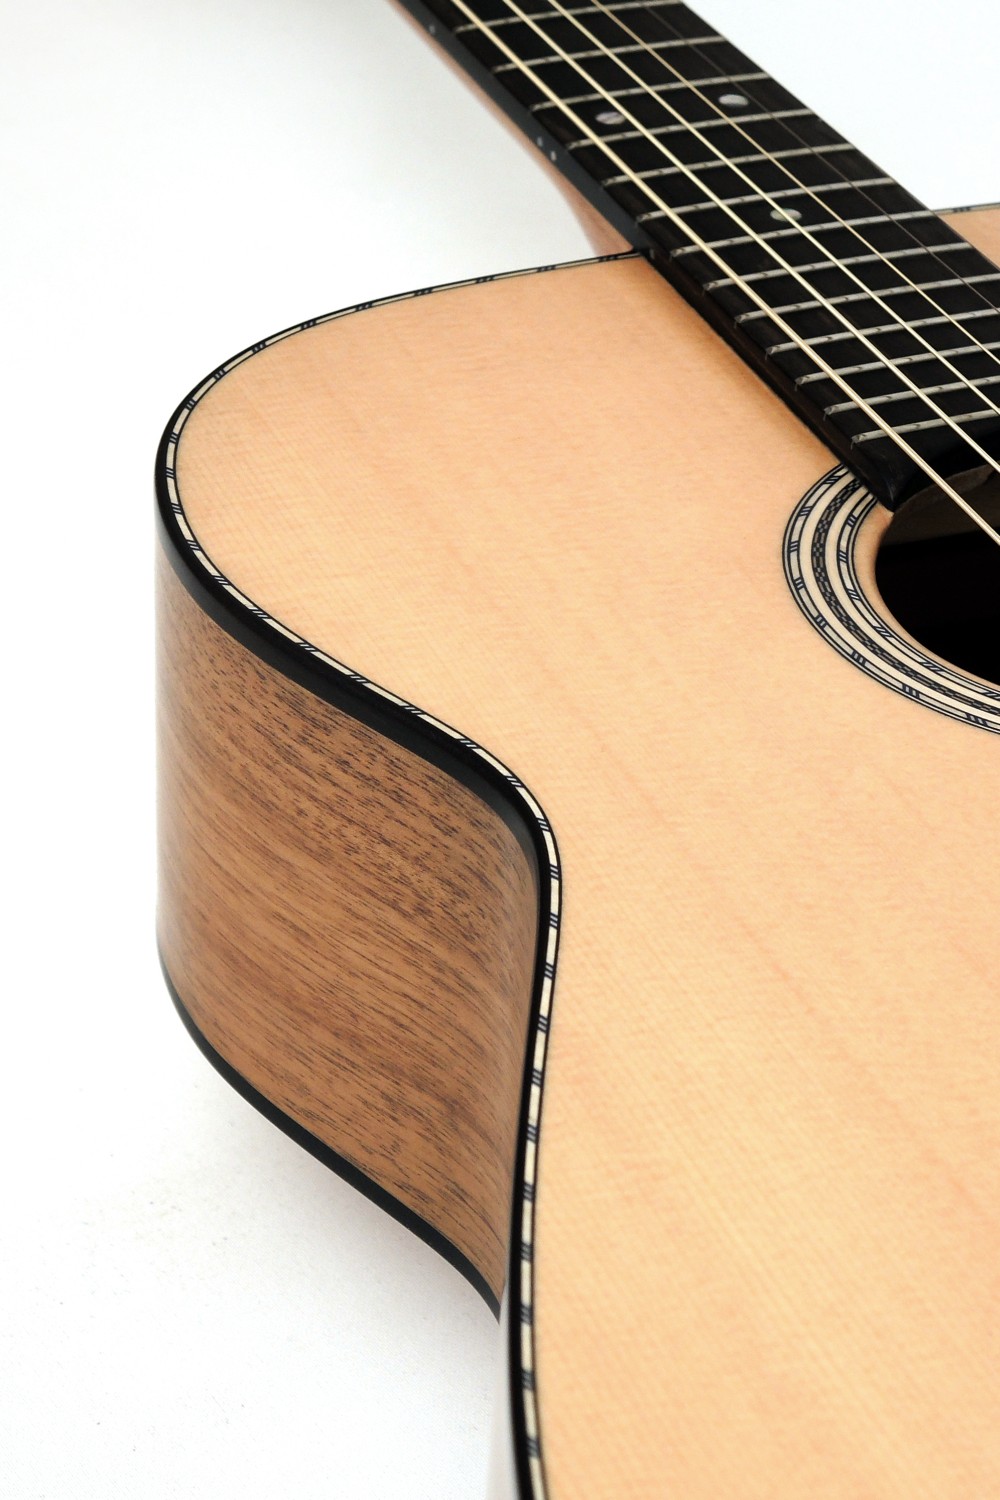 Artibetter Guitar Binding Purfling Strip for Acoustic Classical Guitar and Ukulele